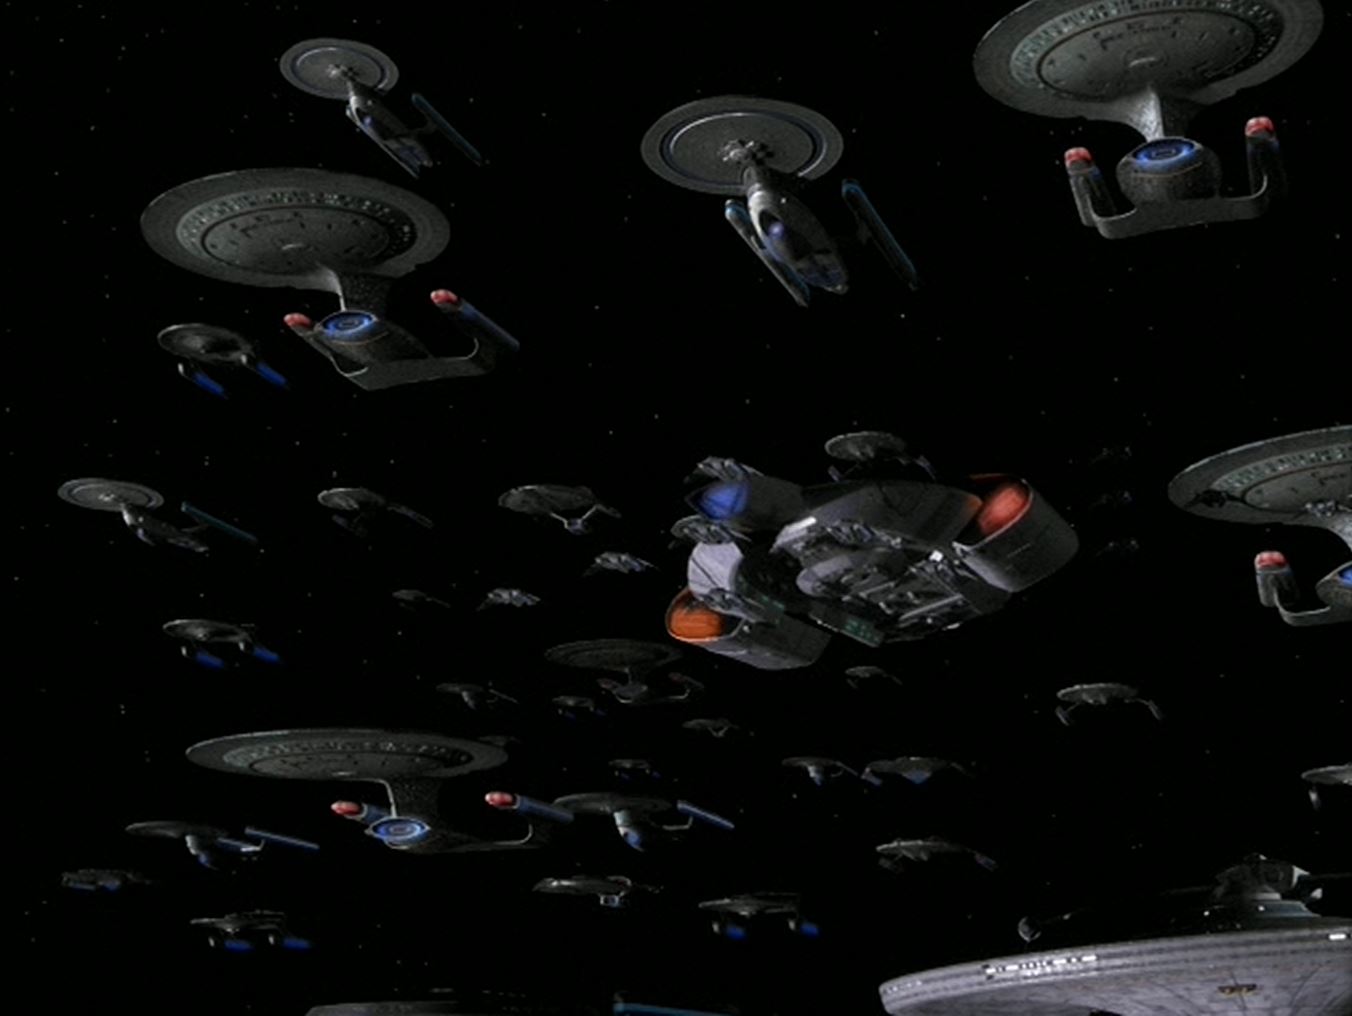 Federation_fleet_prepares_to_engage_Dominion_fleet.jpg